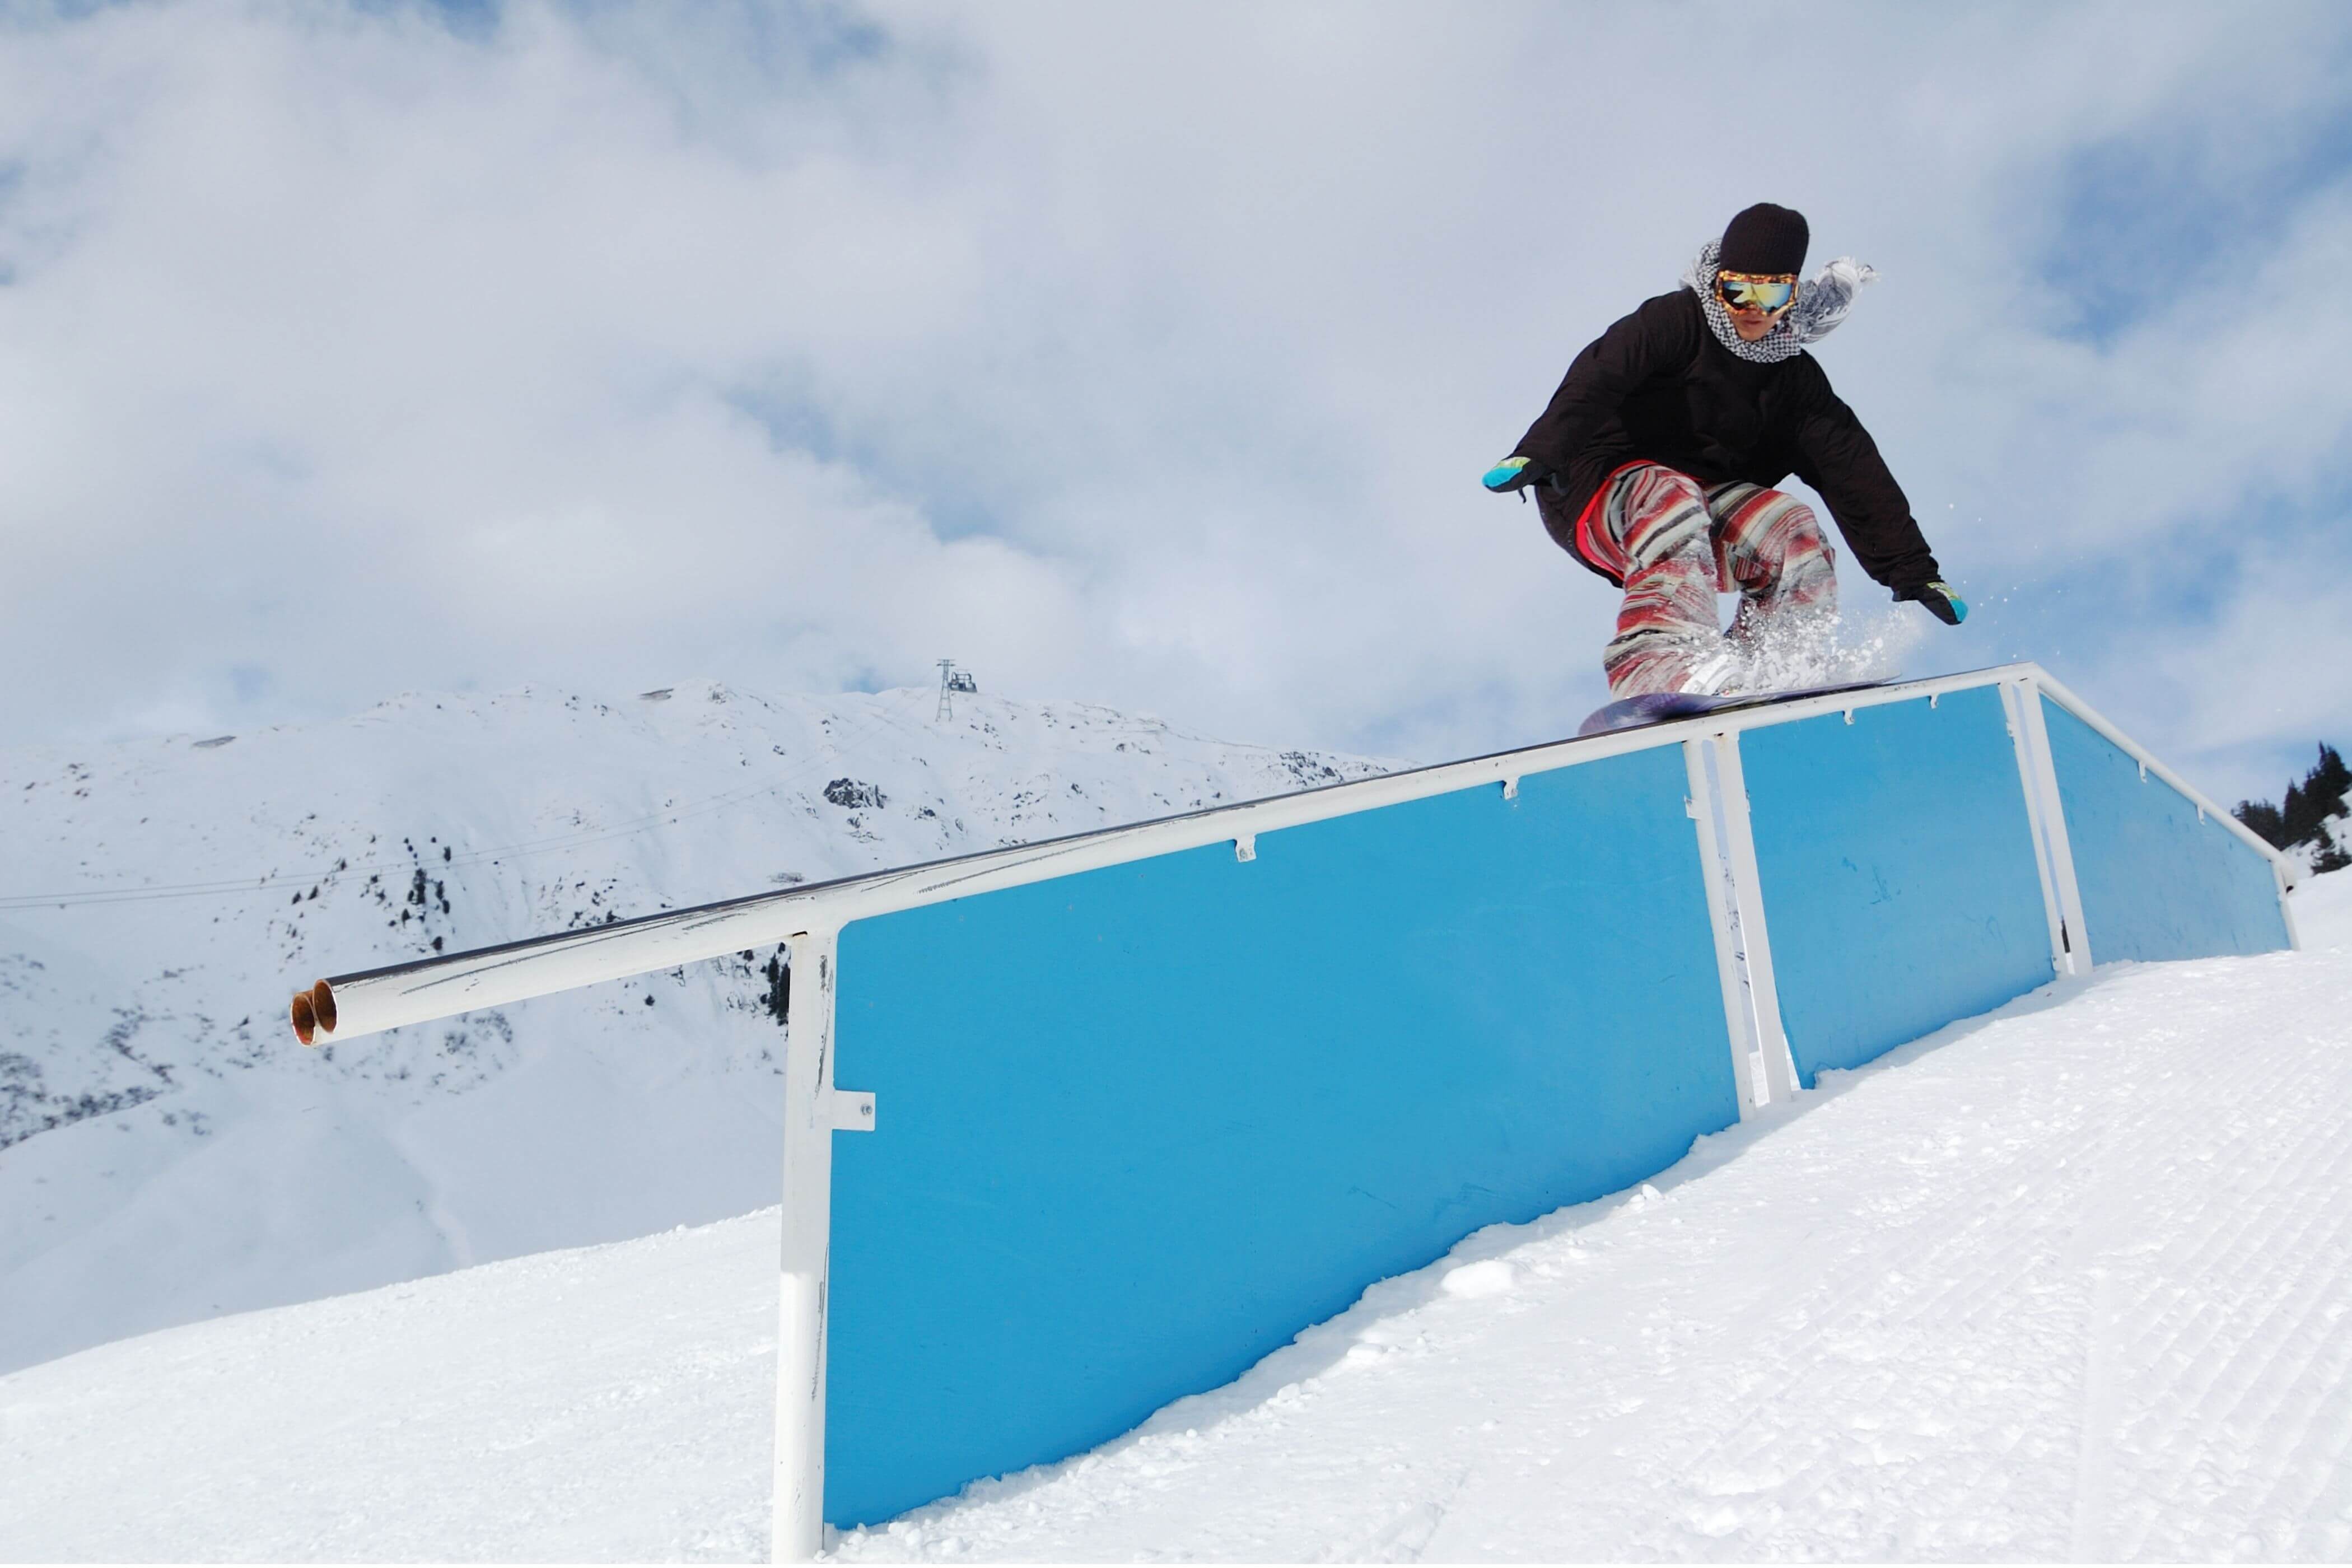 Snowboarder hitting a rail.